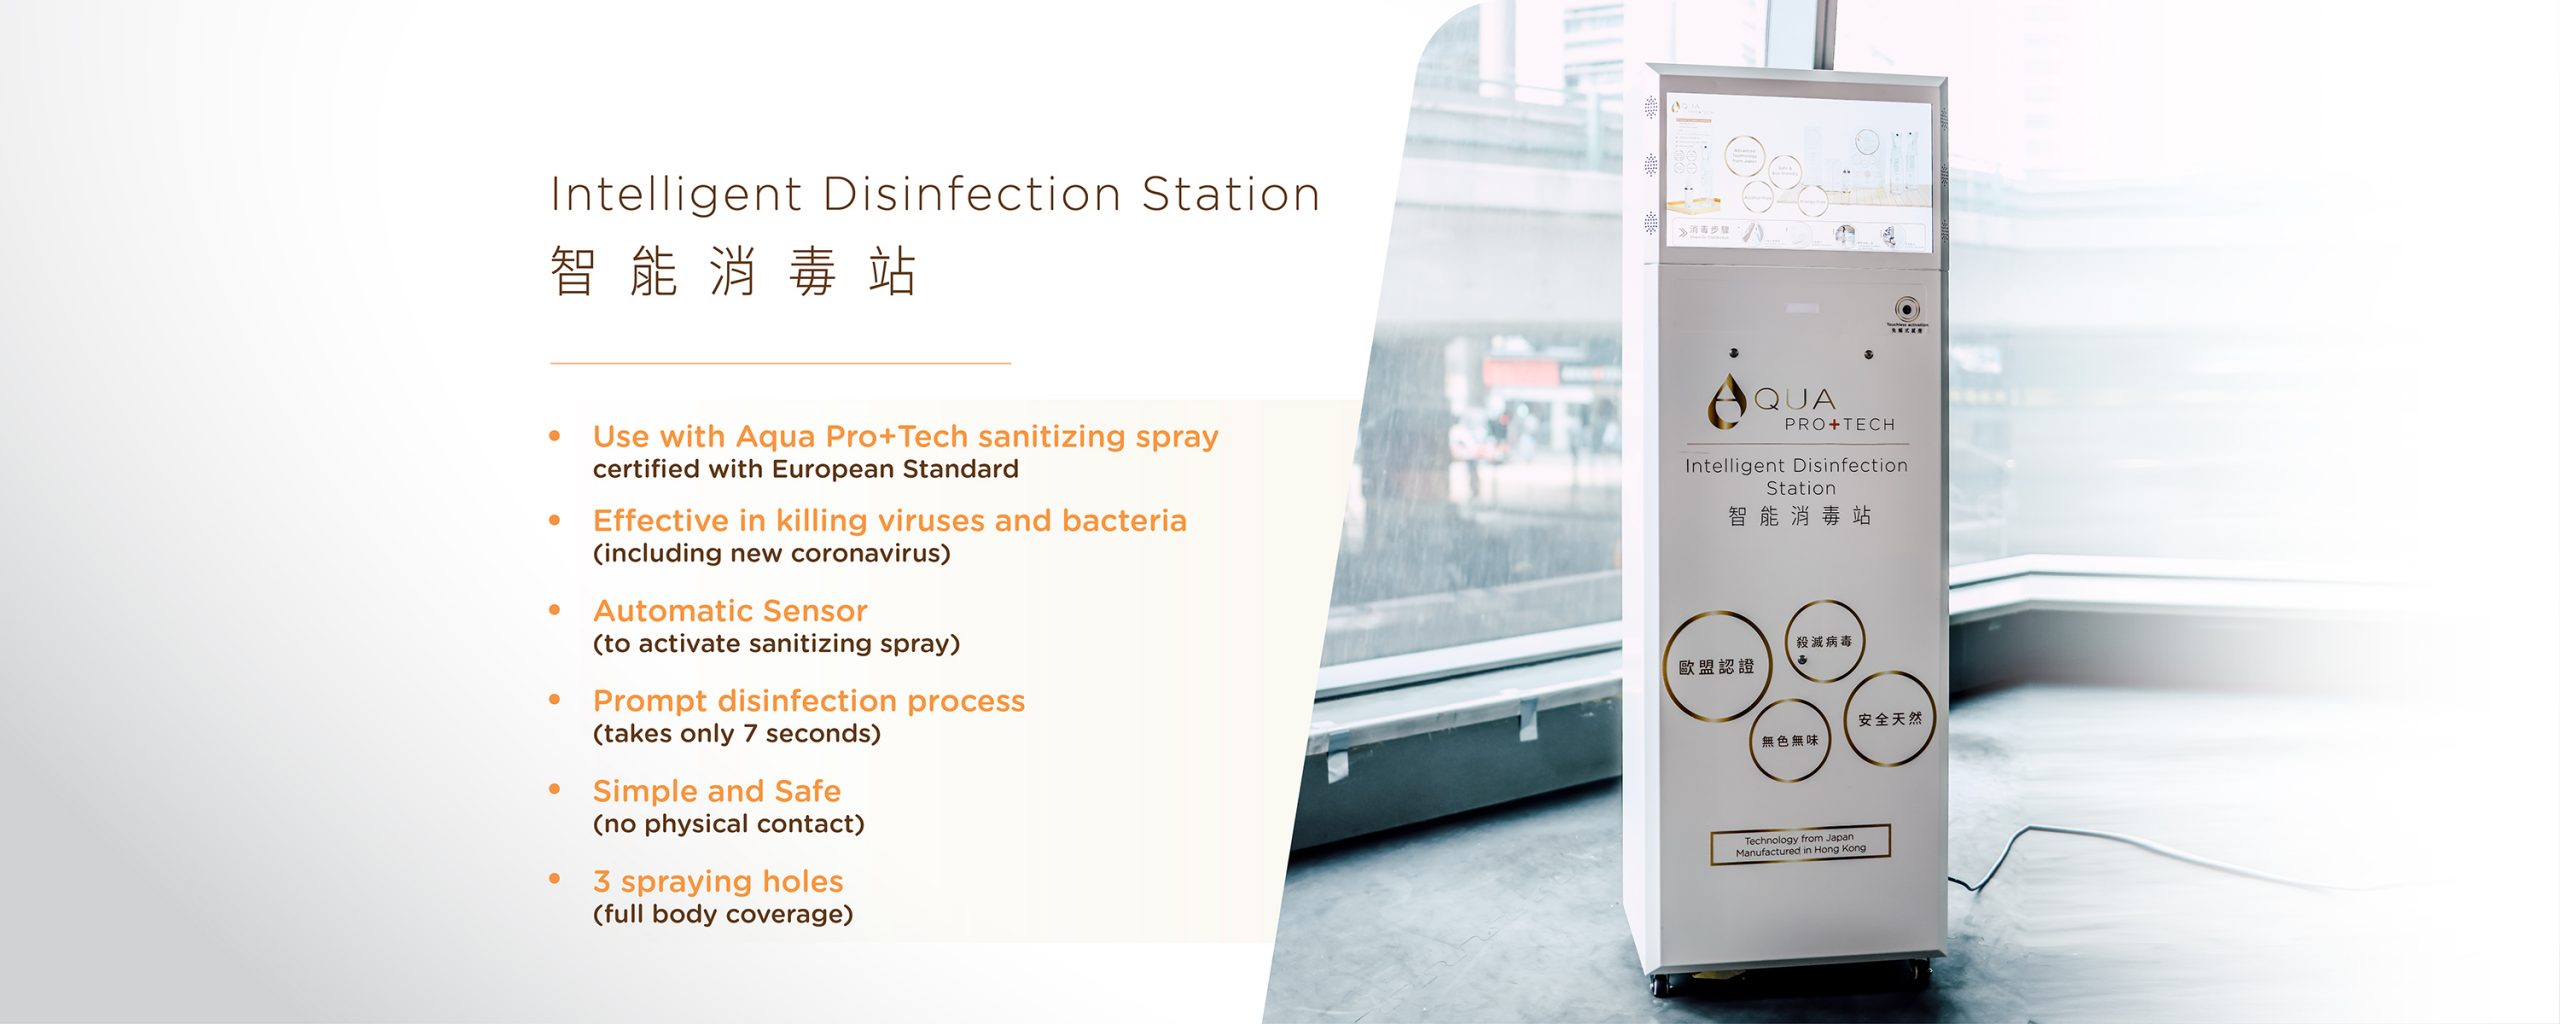 AQUA PROTECH Intelligent Disinfection Station